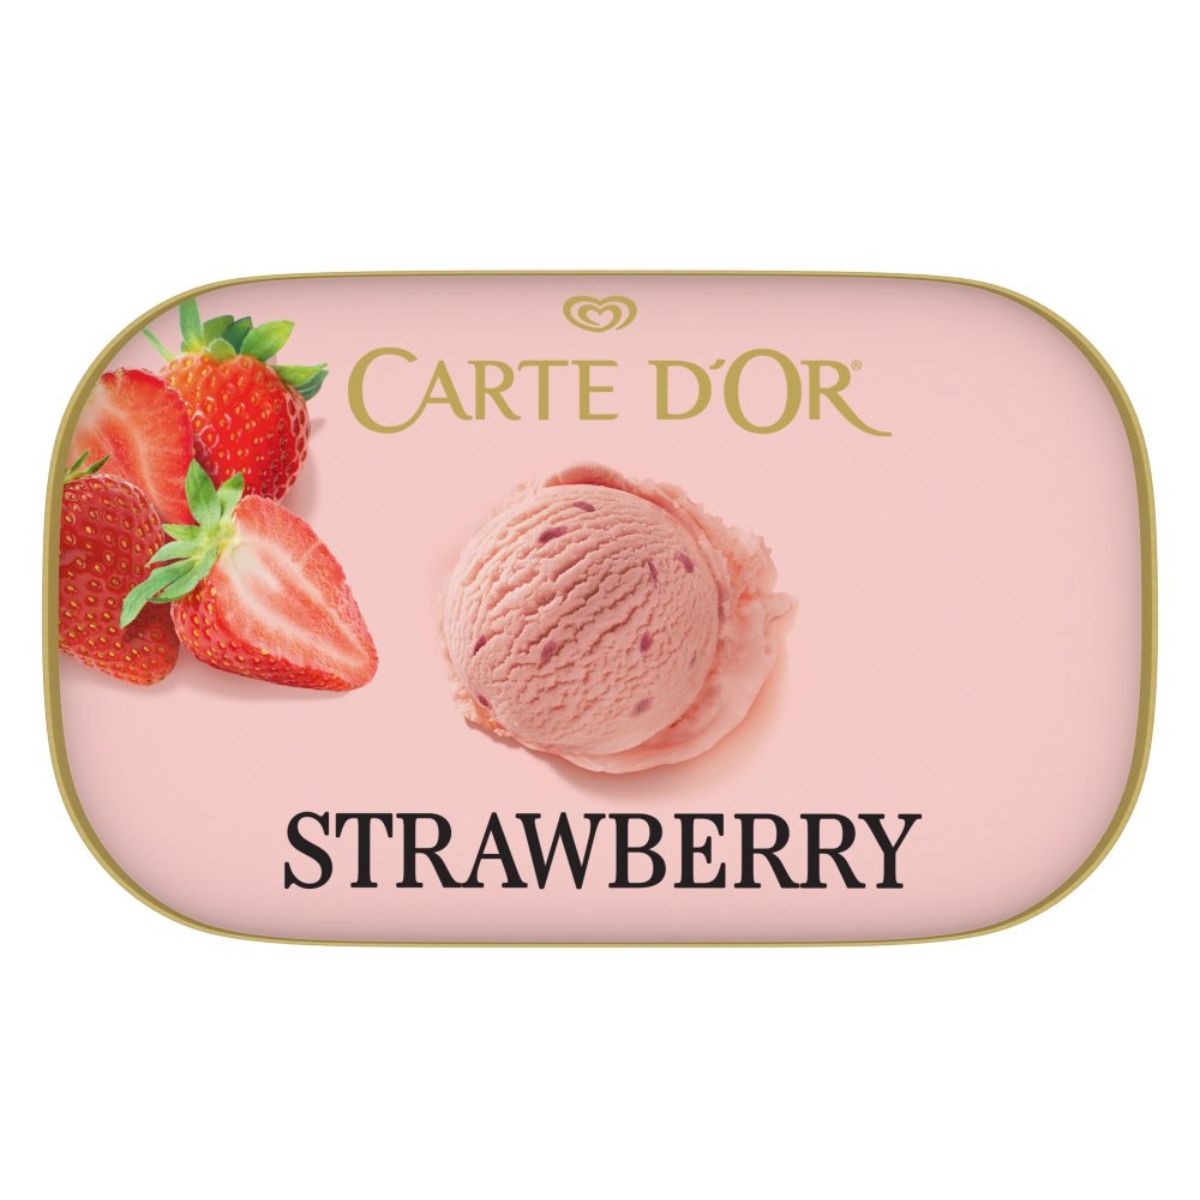 Carte Dor - Delightful Strawberry Ice Cream Dessert - 900ml ice cream.